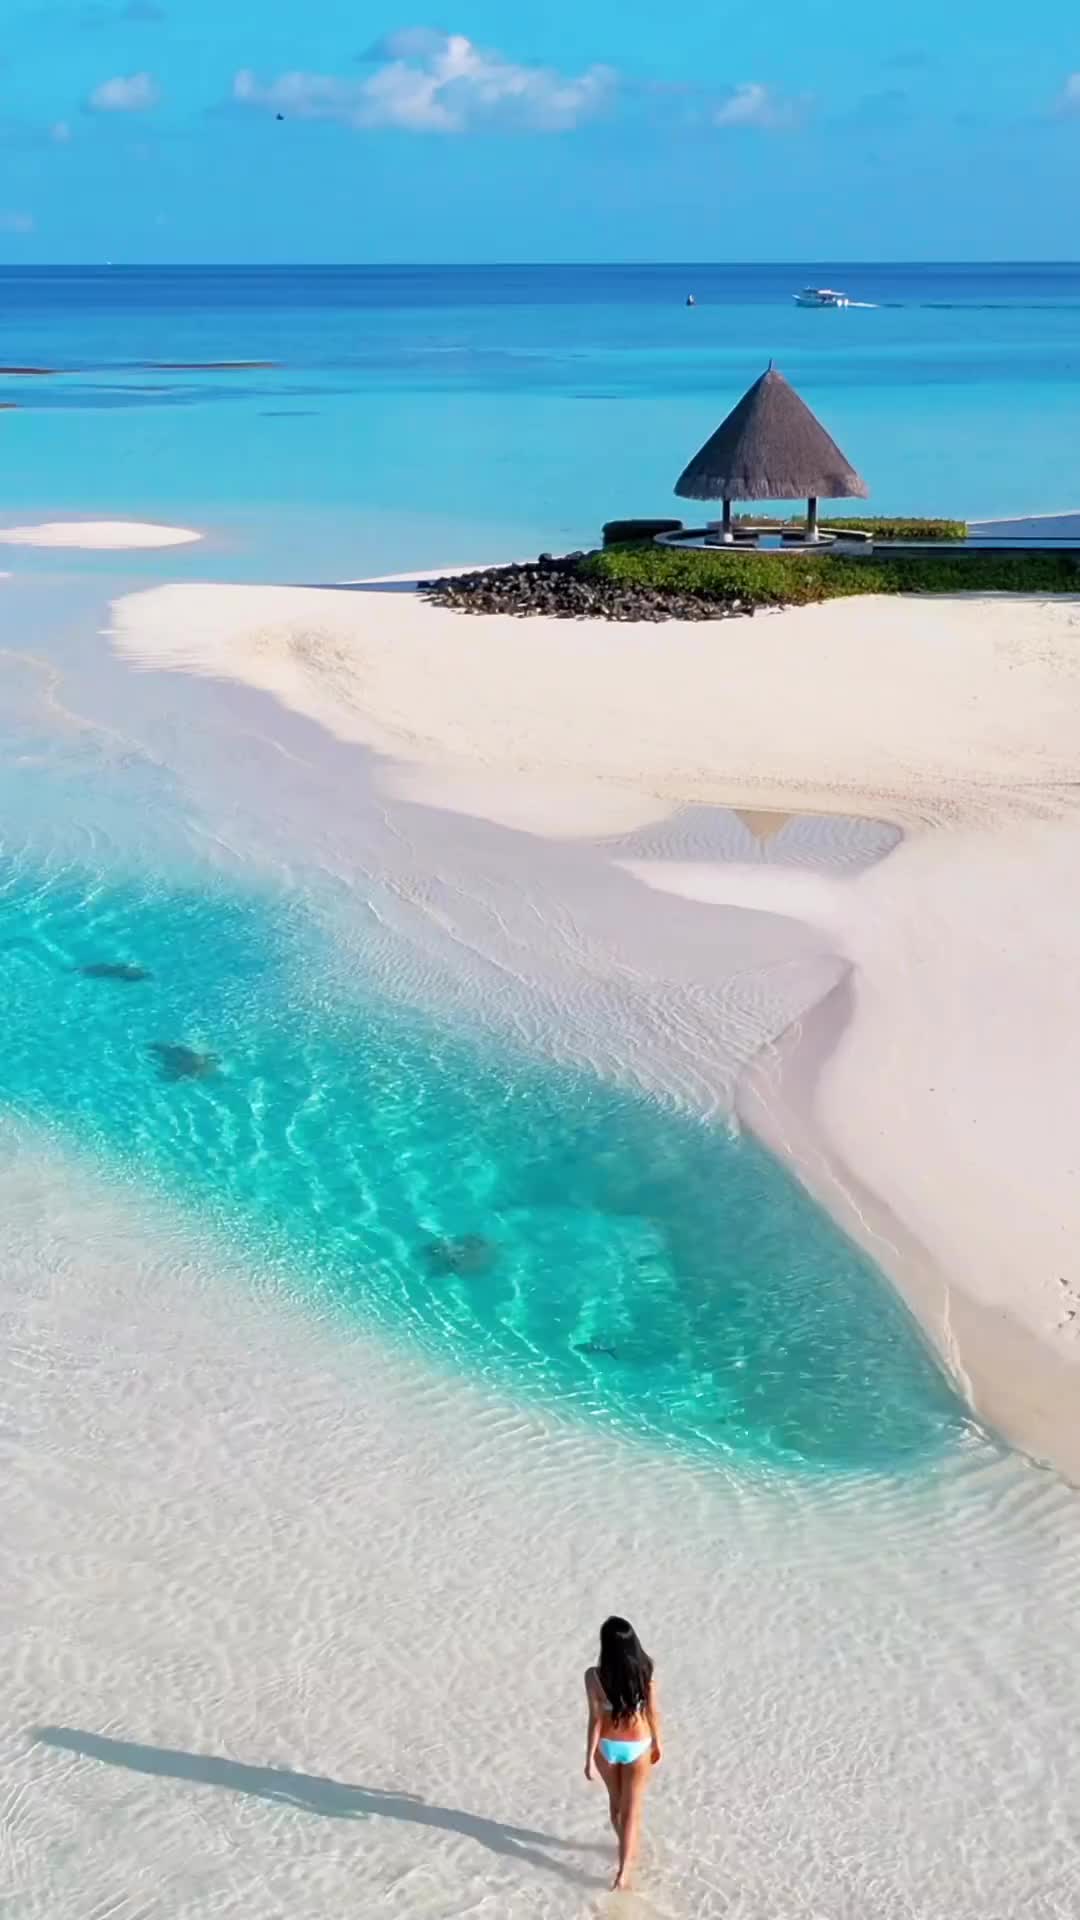 this place is absolute gem💧💎 always gonna be one of my favorite islands ♥️ 📍Four Seasons Kuda Huraa 
.

#weekendvibes #islandgirl #islandlife #beachesnresorts #beachlover #darlingescapes #maldives #summerlove